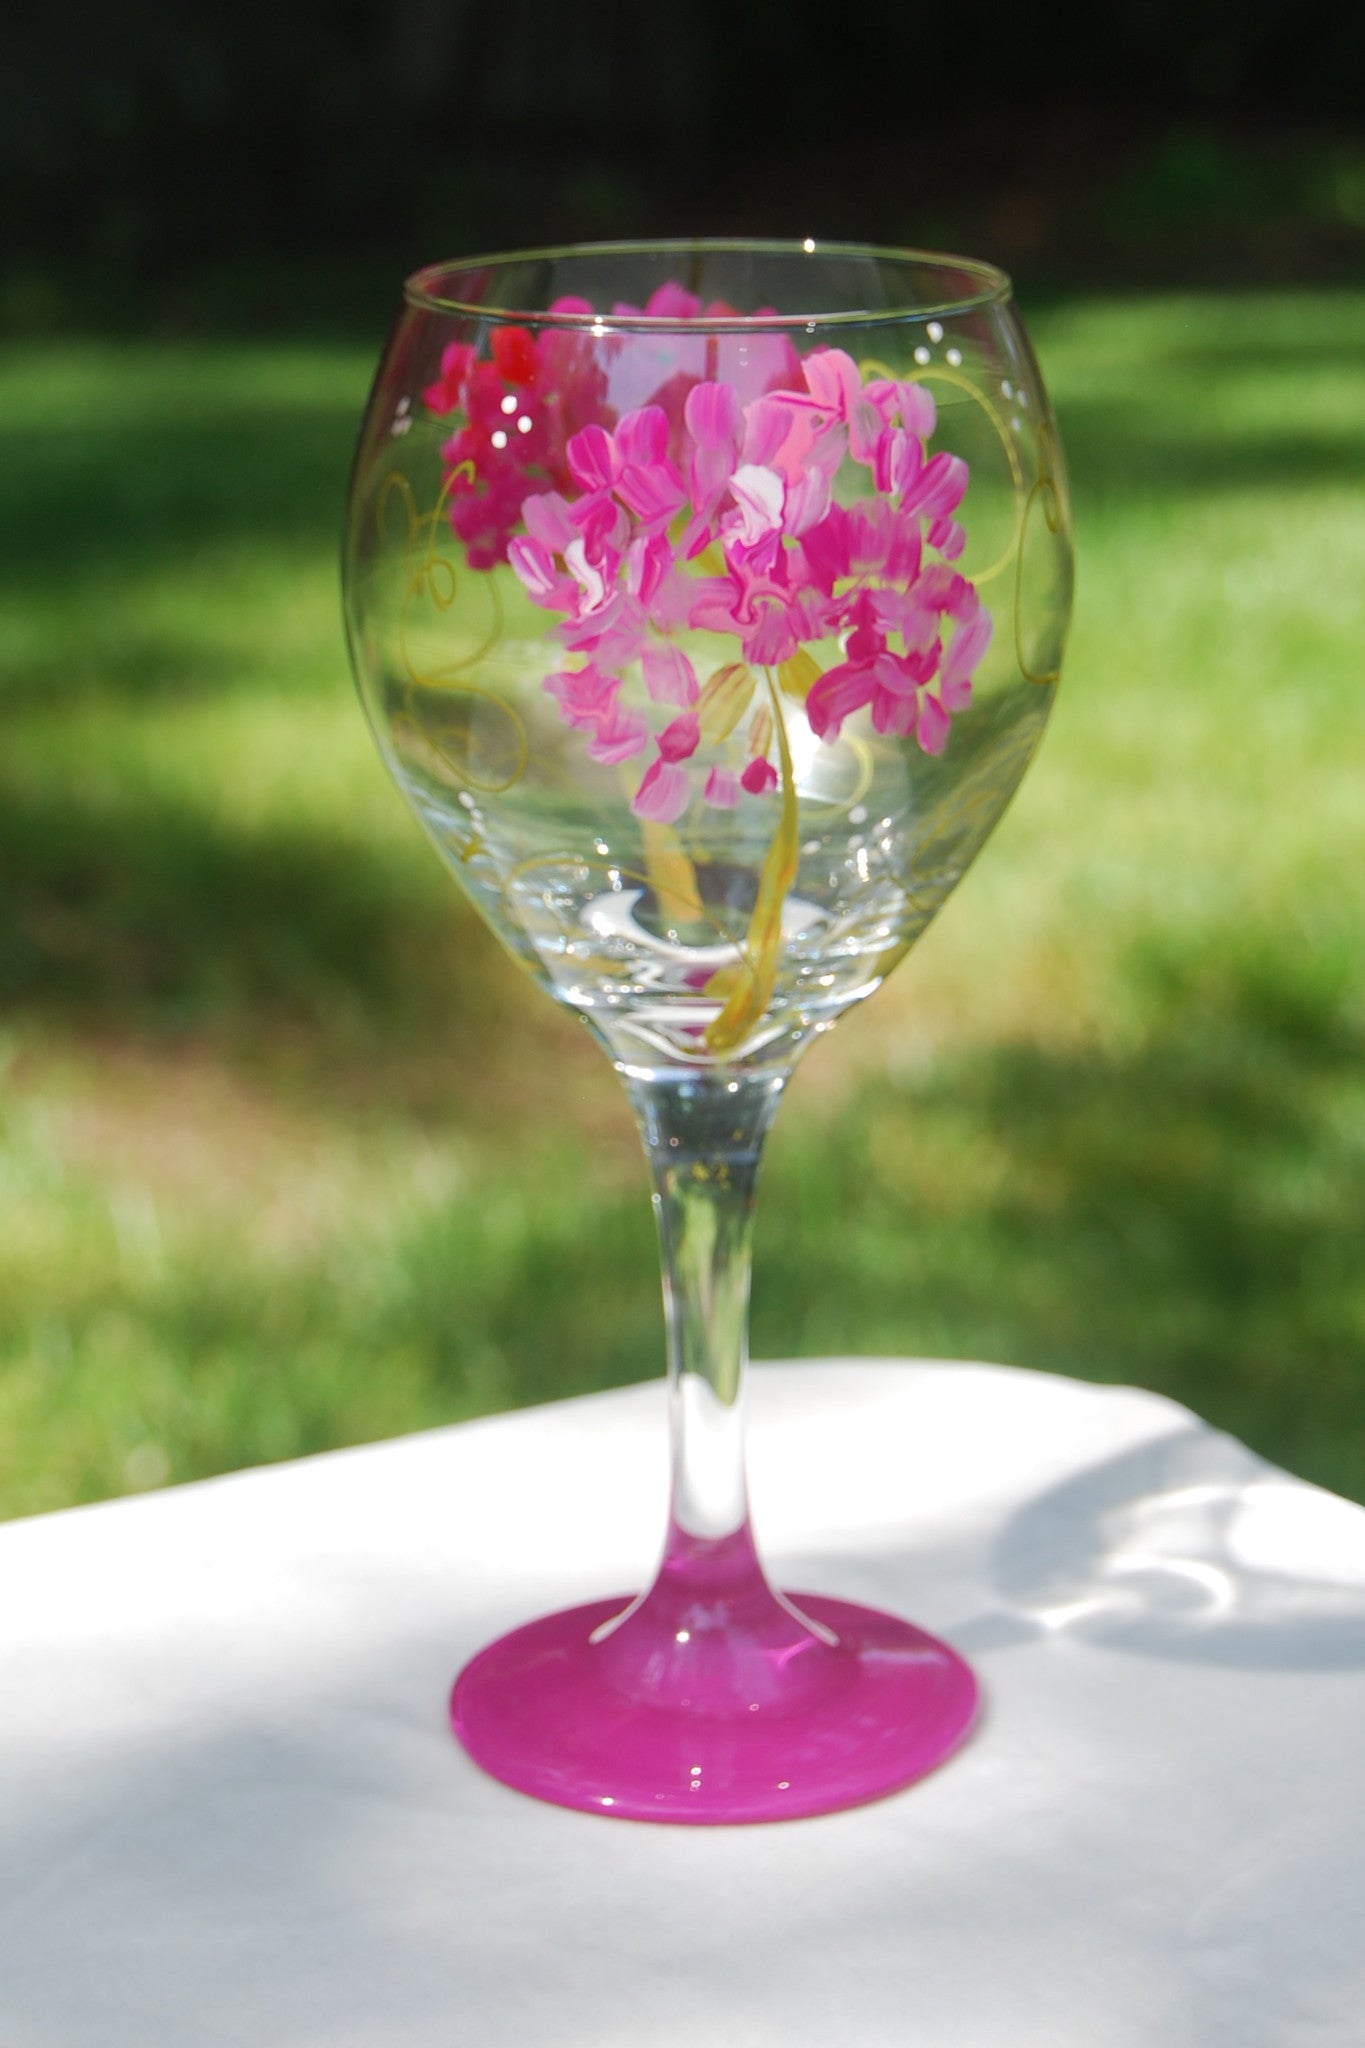 Geranium Hand-painted Wine Glasses & Glassware